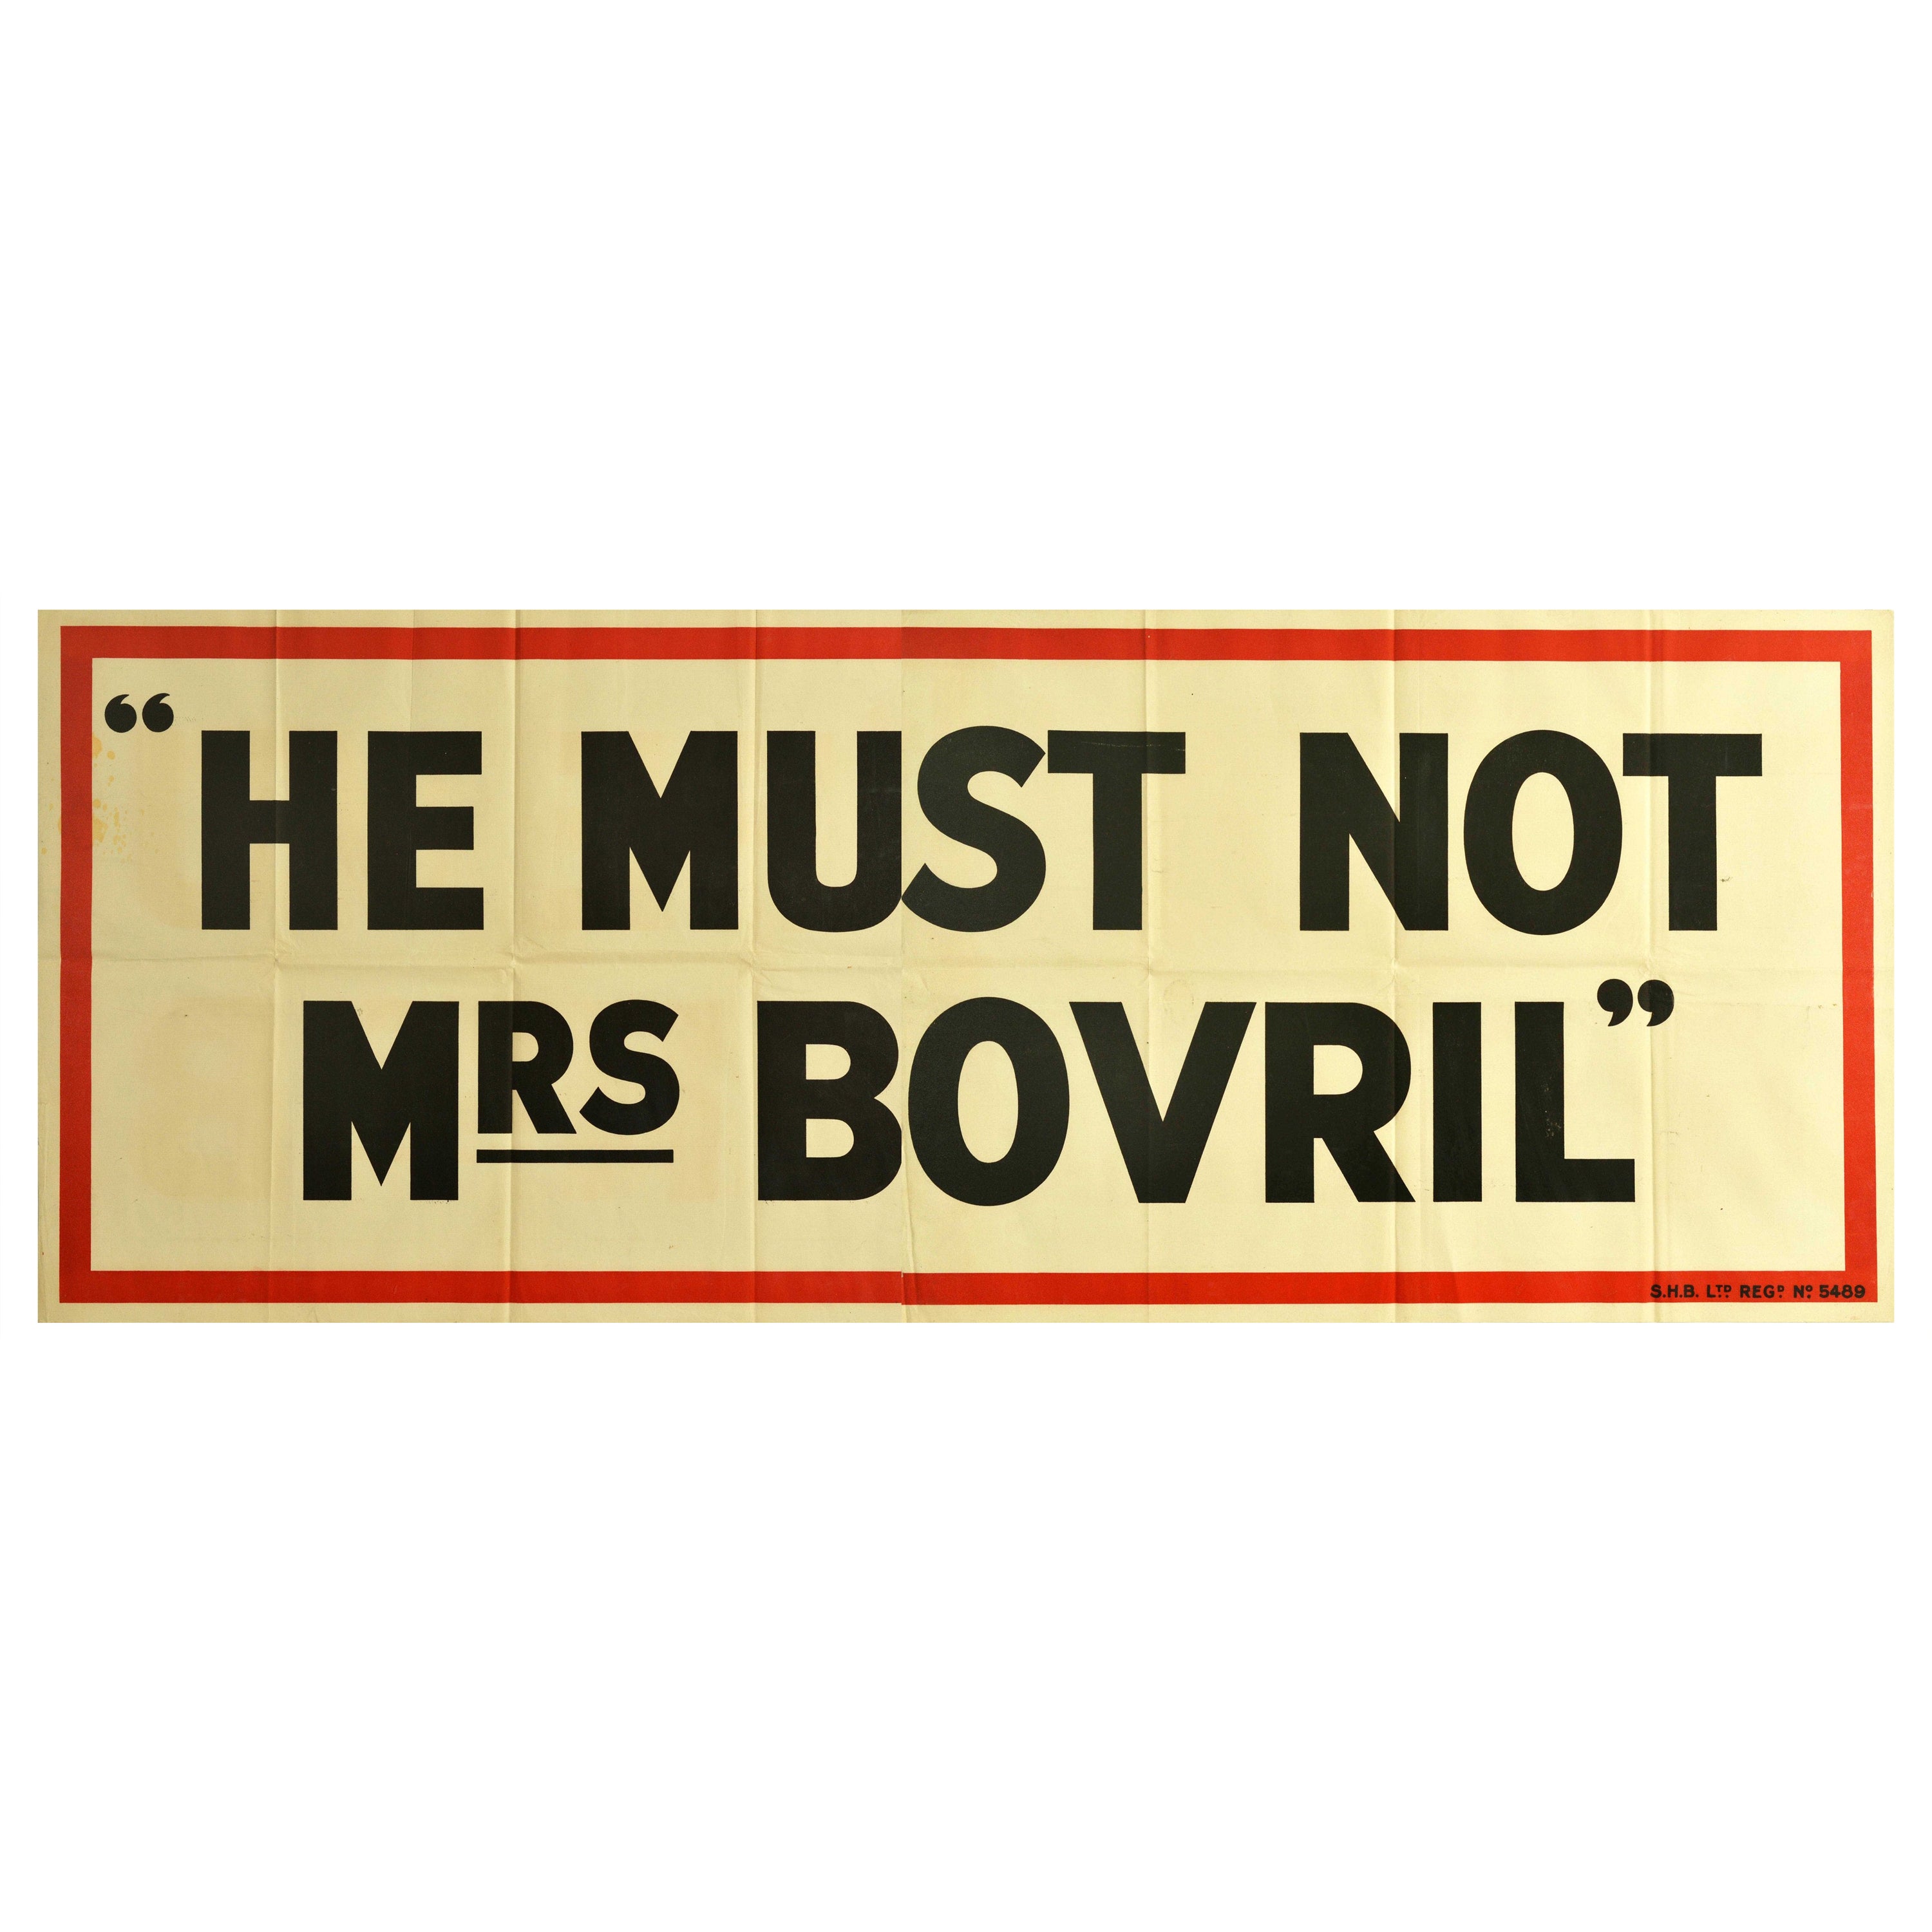 Original-Vintage-Poster „He Must Not Mrs Bovril“, Wortspiel, Trink-/Getränkekampagne